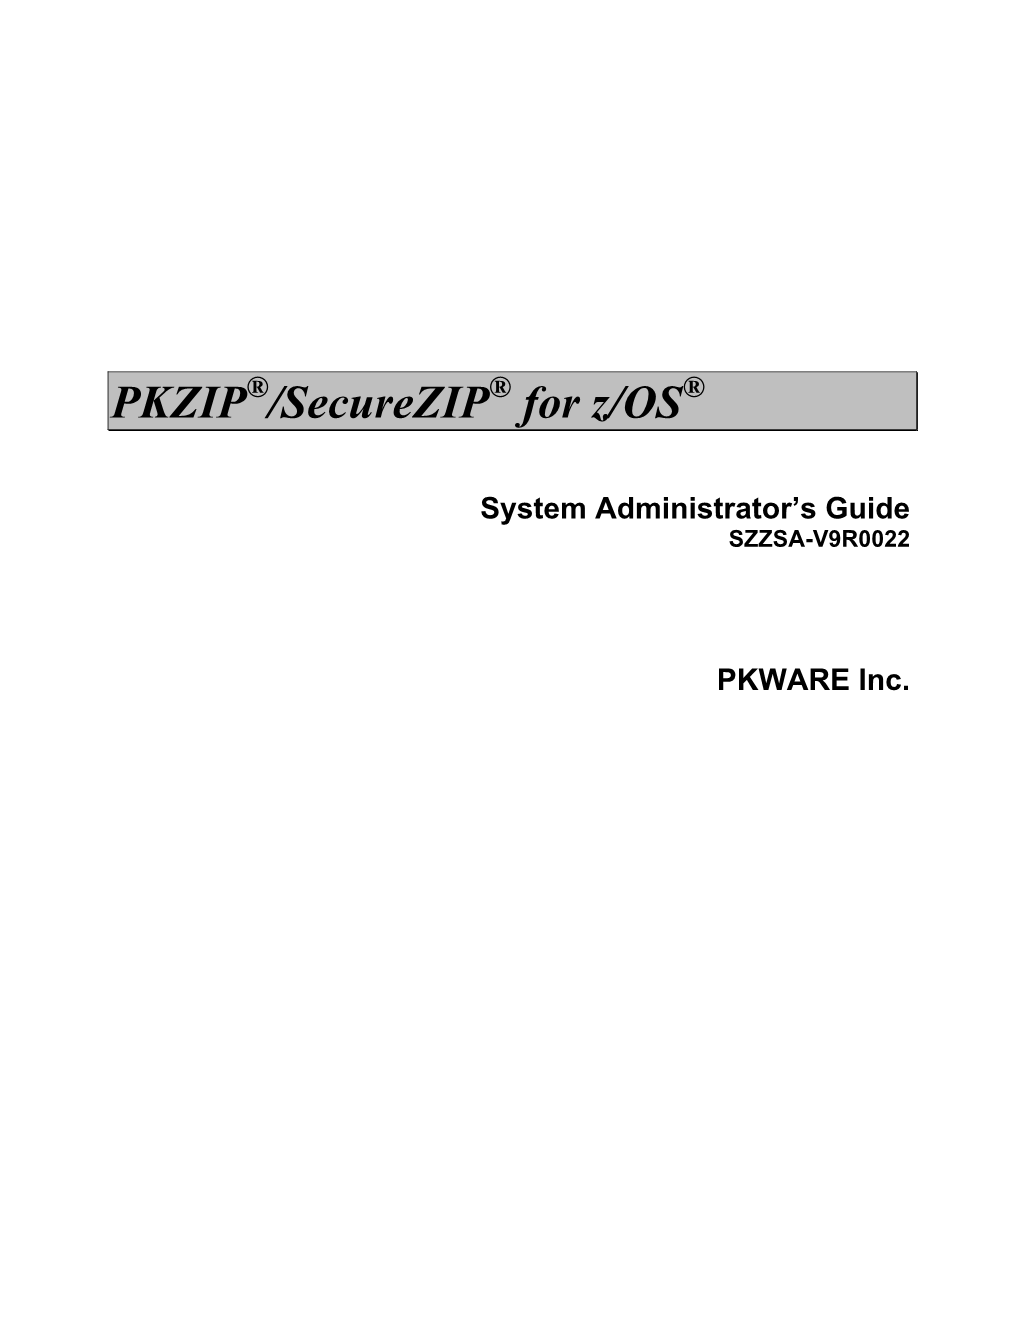 PKZIP/Securezip for Z/OS 9.0 System Administrator's Guide